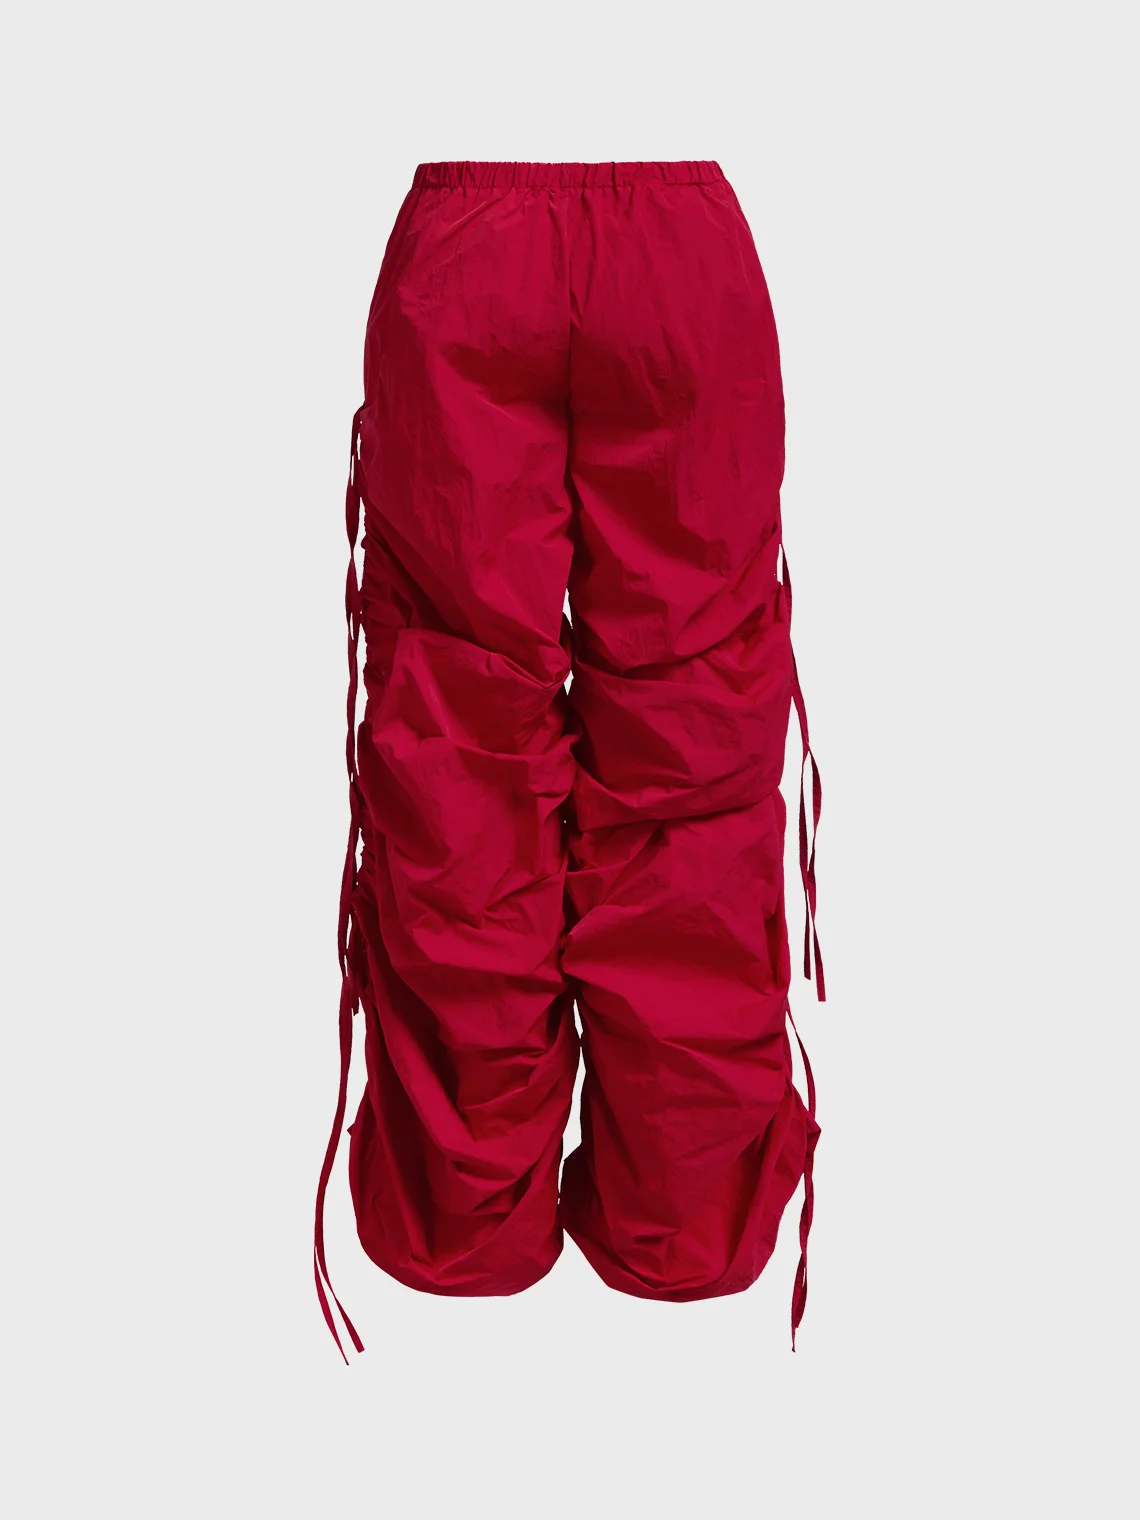 Street Red Bottom Pants